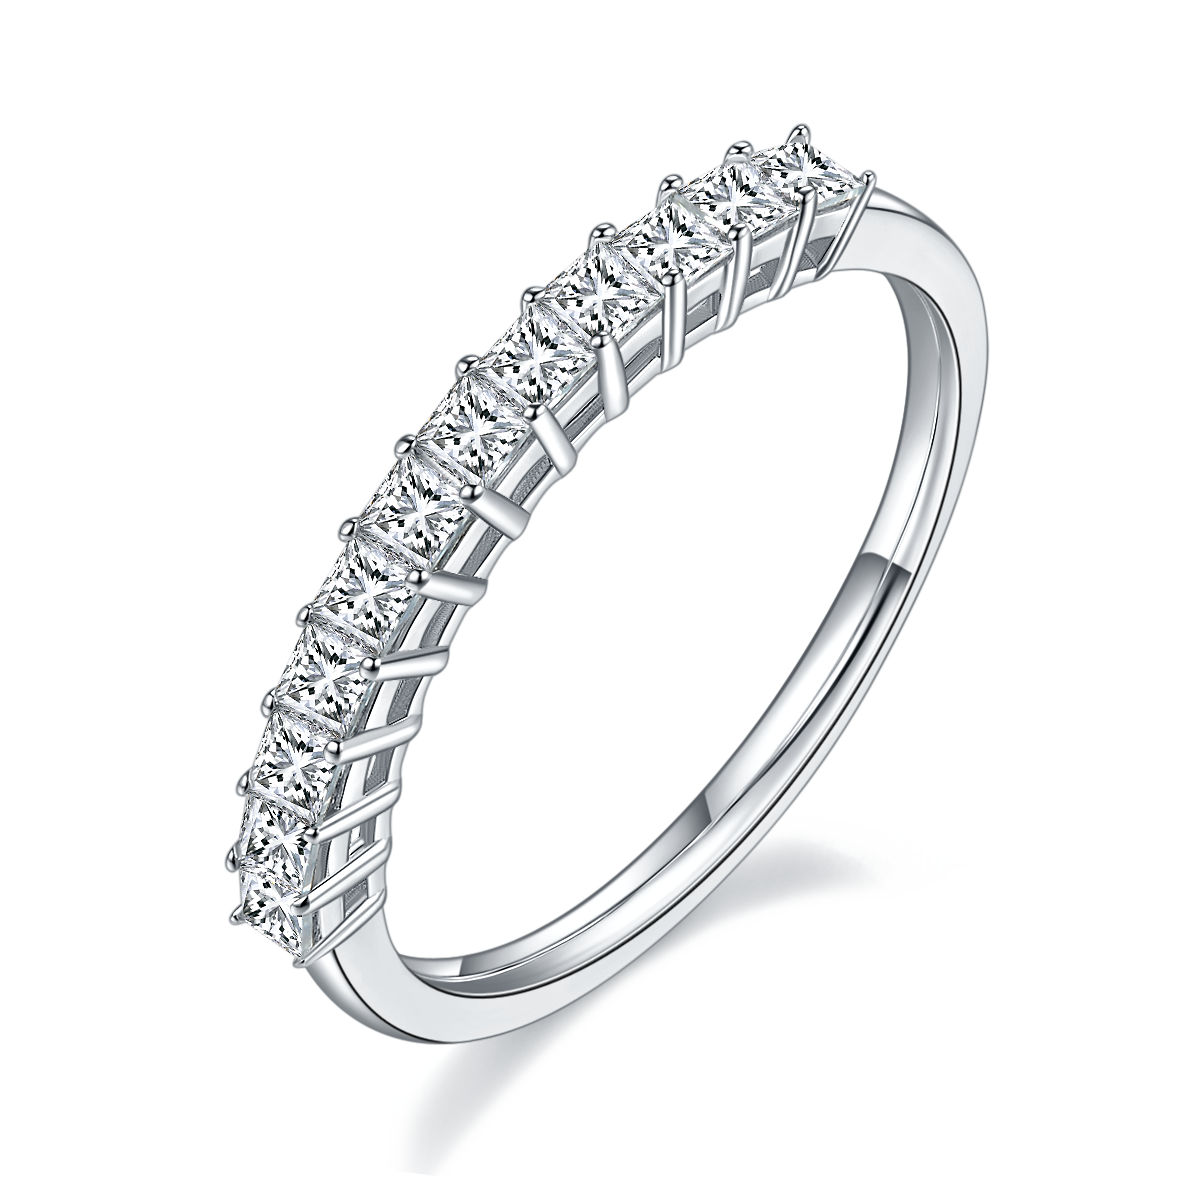 A silver wedding ring set with several small princess cut moissanites.